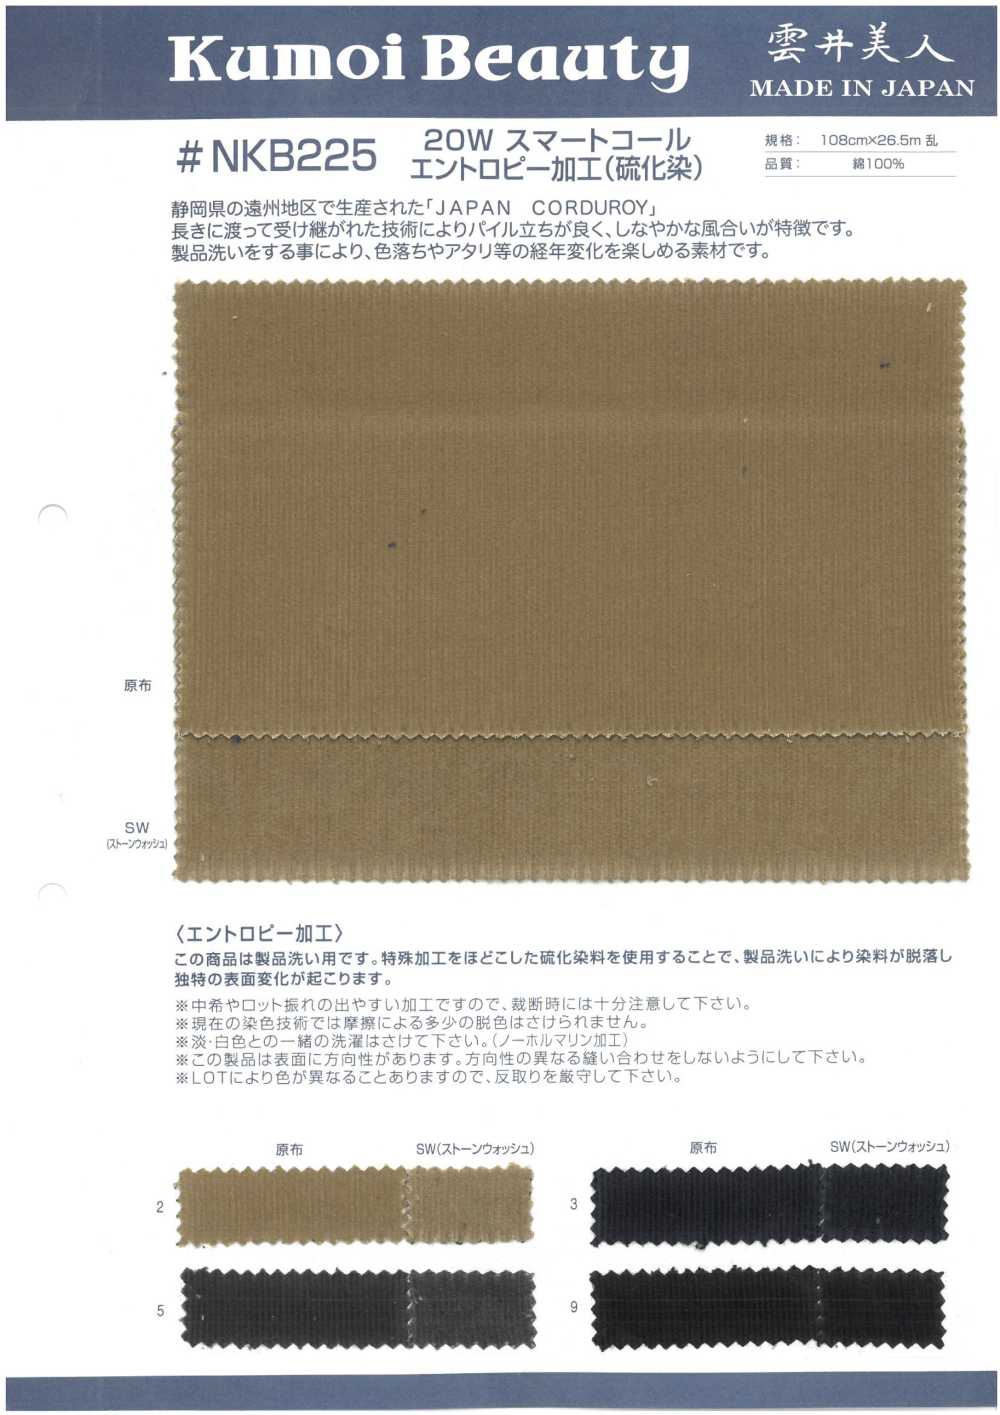 NKB225 20 W Intelligente Cord-Entropieverarbeitung (Sulfidfärbung)[Textilgewebe] Kumoi Beauty (Chubu Velveteen Cord)